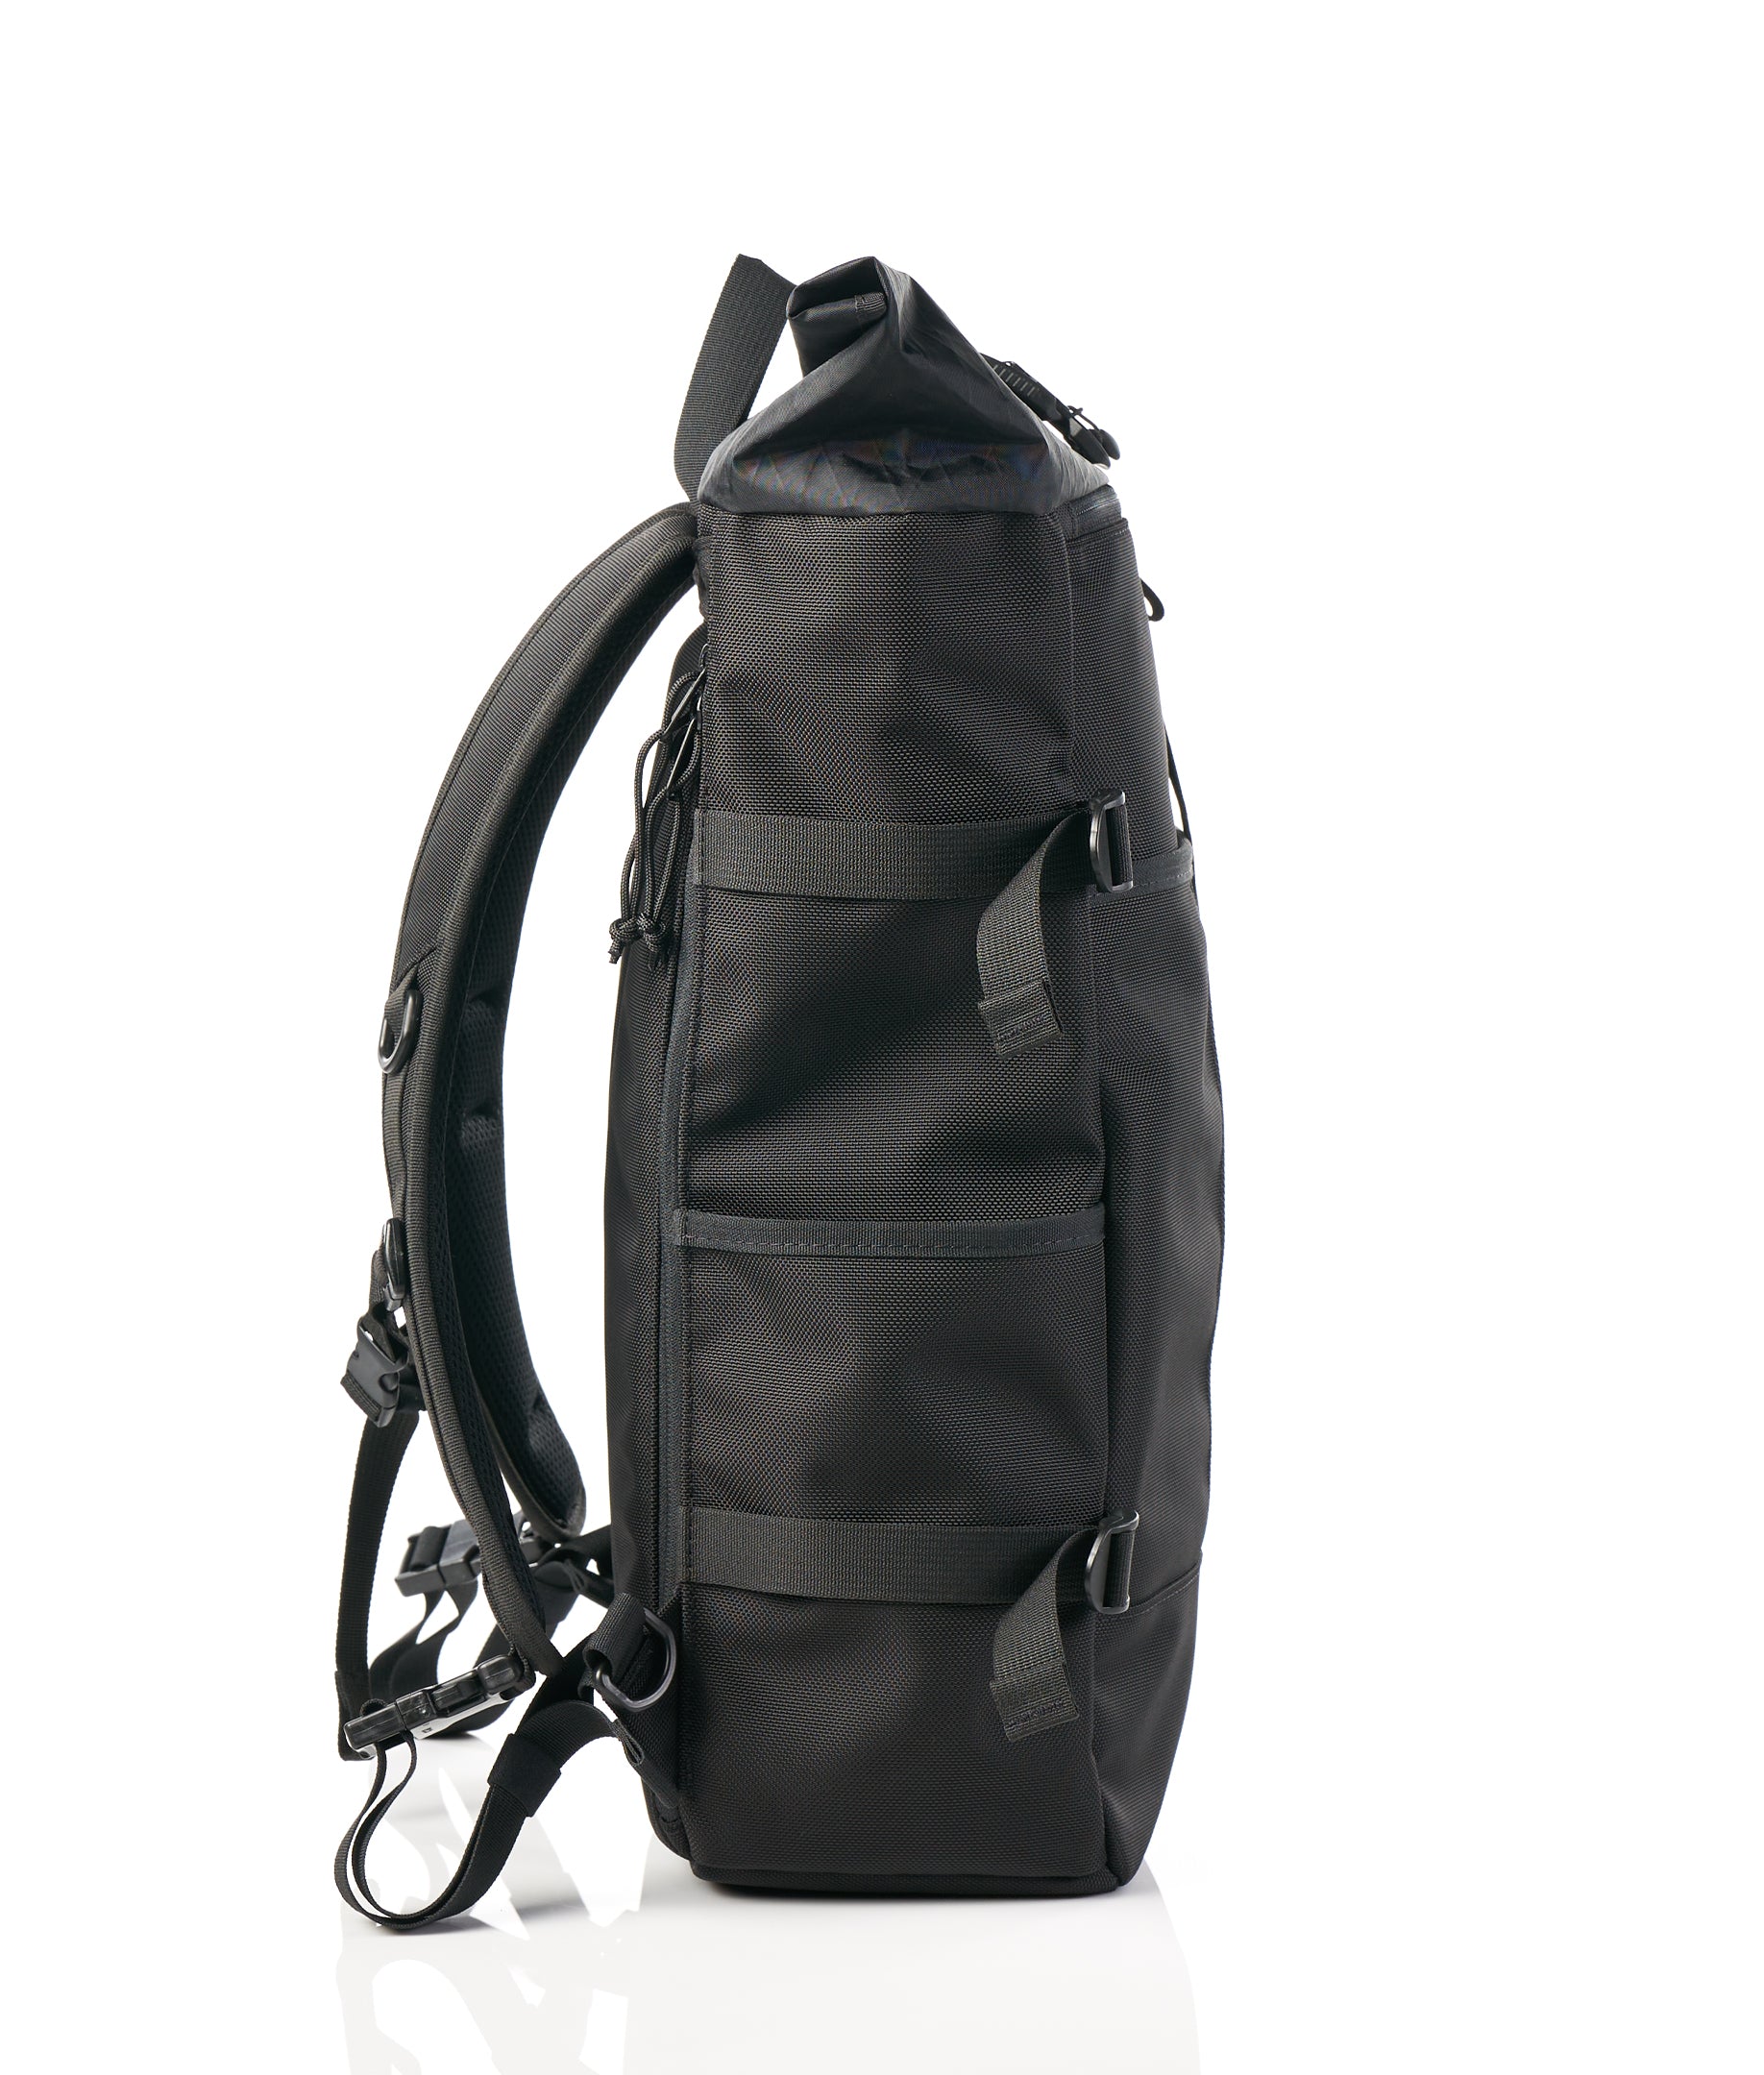 28L Rolltop Backpack - Ballistic Black